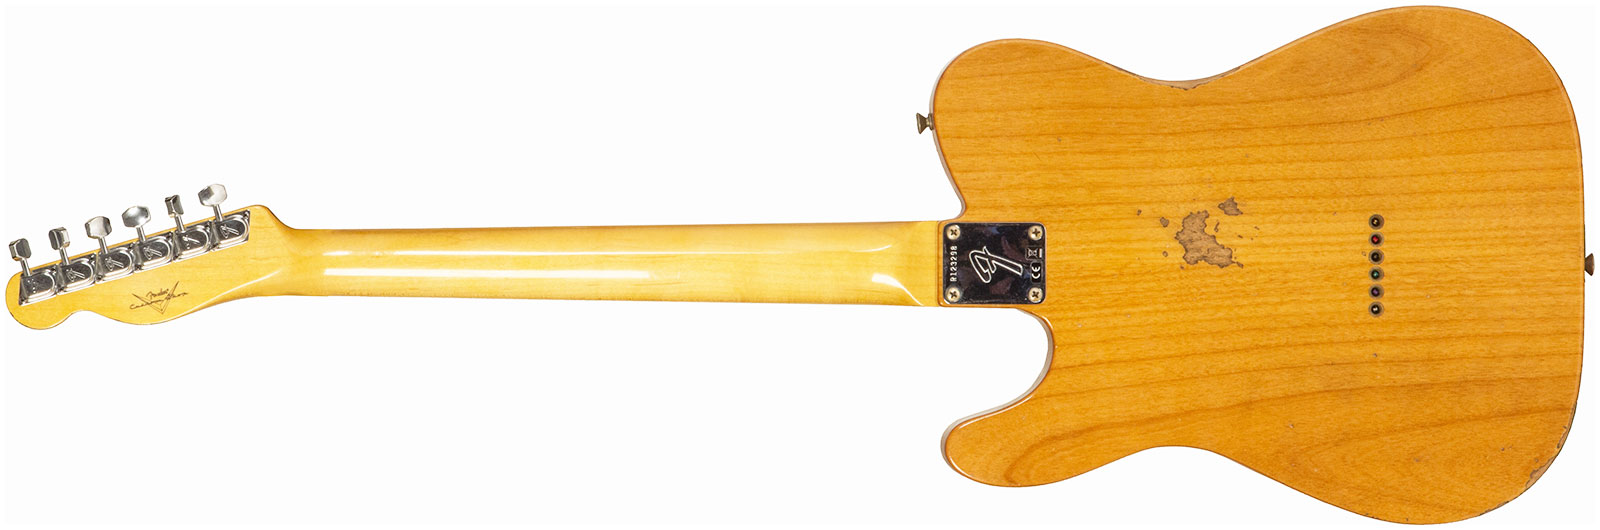 Fender Custom Shop Tele 1968 2s Ht Mn #r123298 - Relic Aged Natural - Guitare Électrique Forme Tel - Variation 1